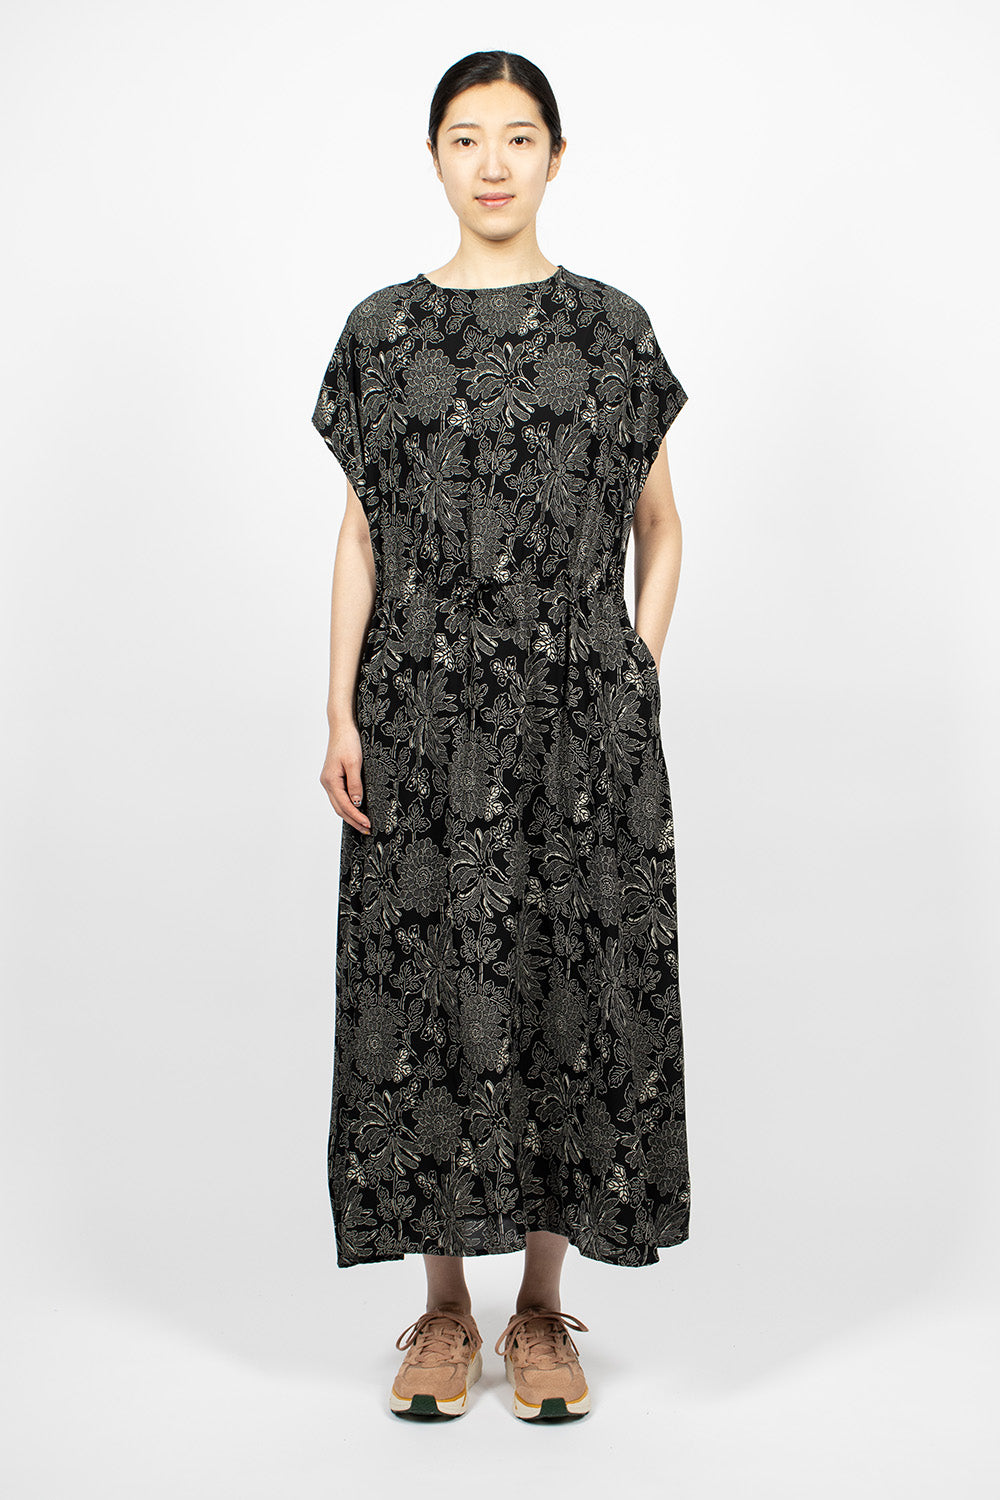 Drawstring Dress Black Floral